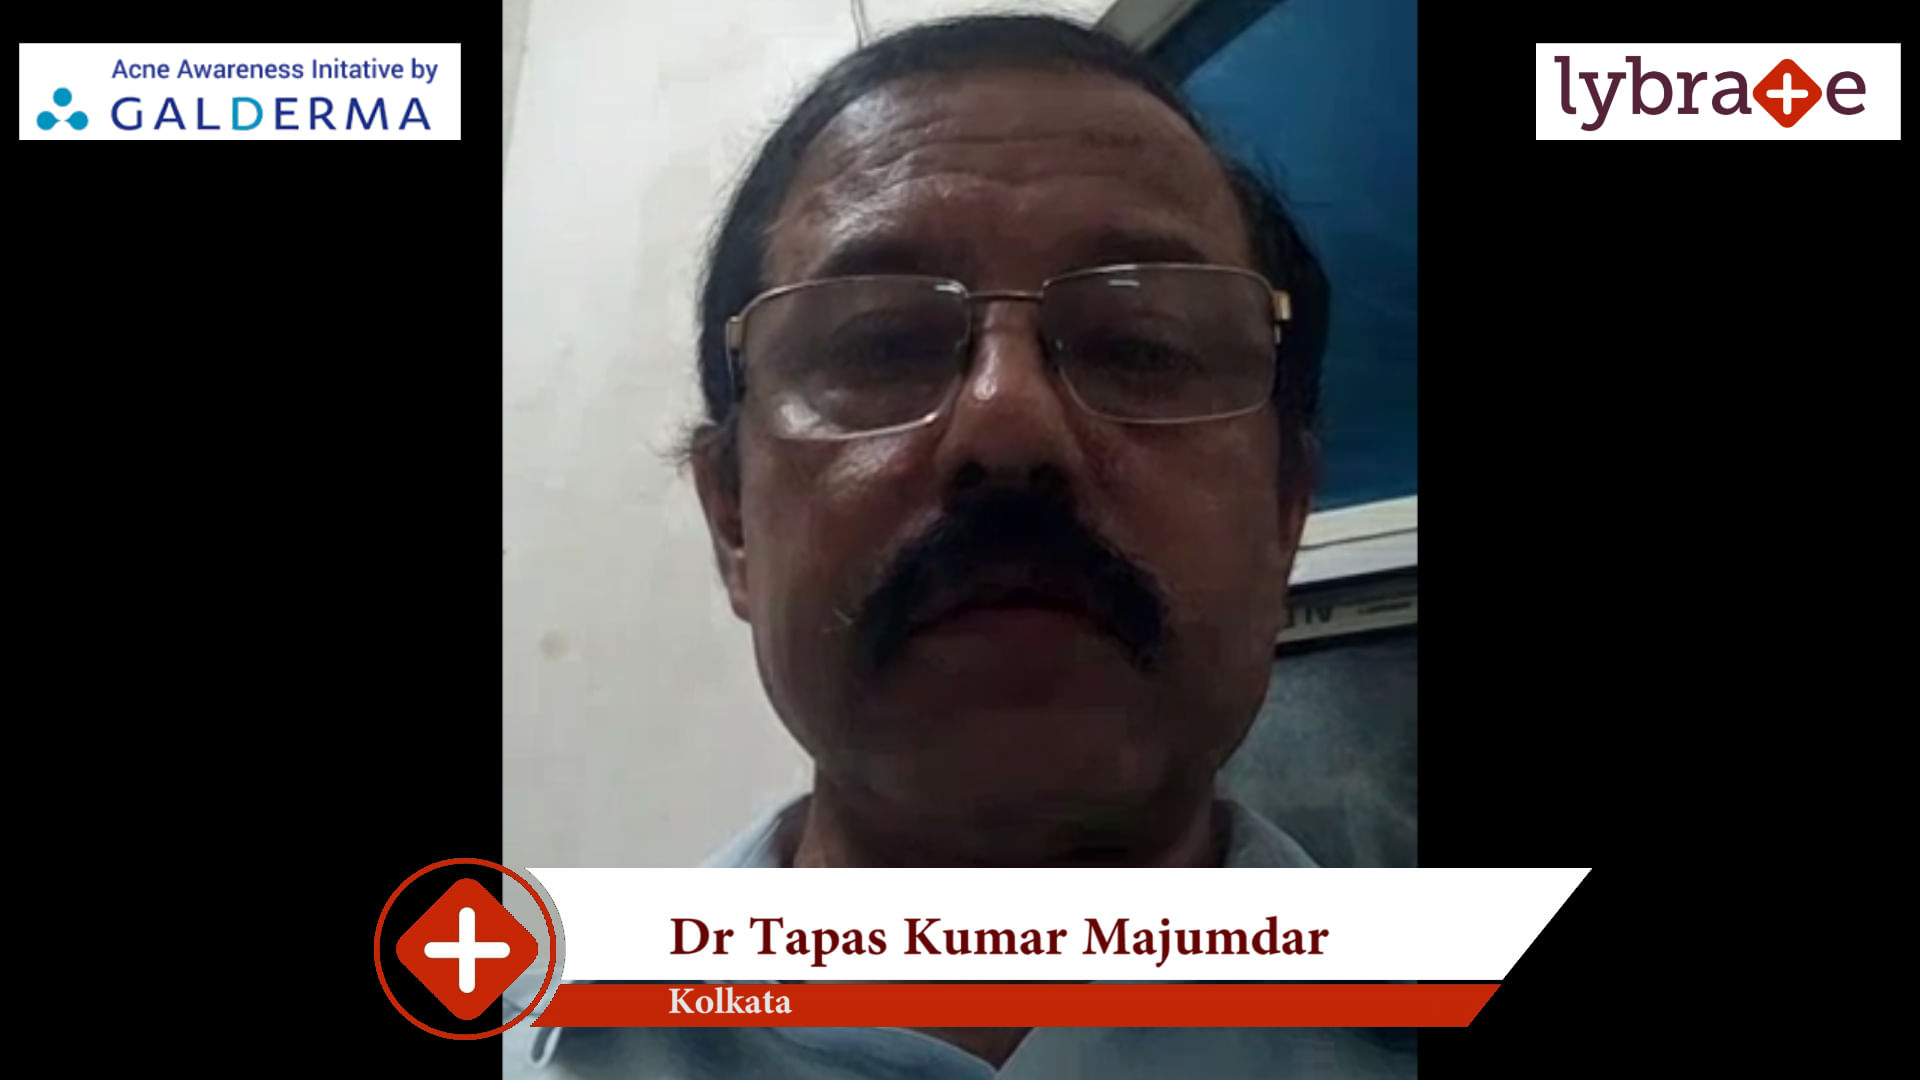 Lybrate | Dr. Tapas Kumar Majumdar speaks on IMPORTANCE OF TREATING ACNE EARLY